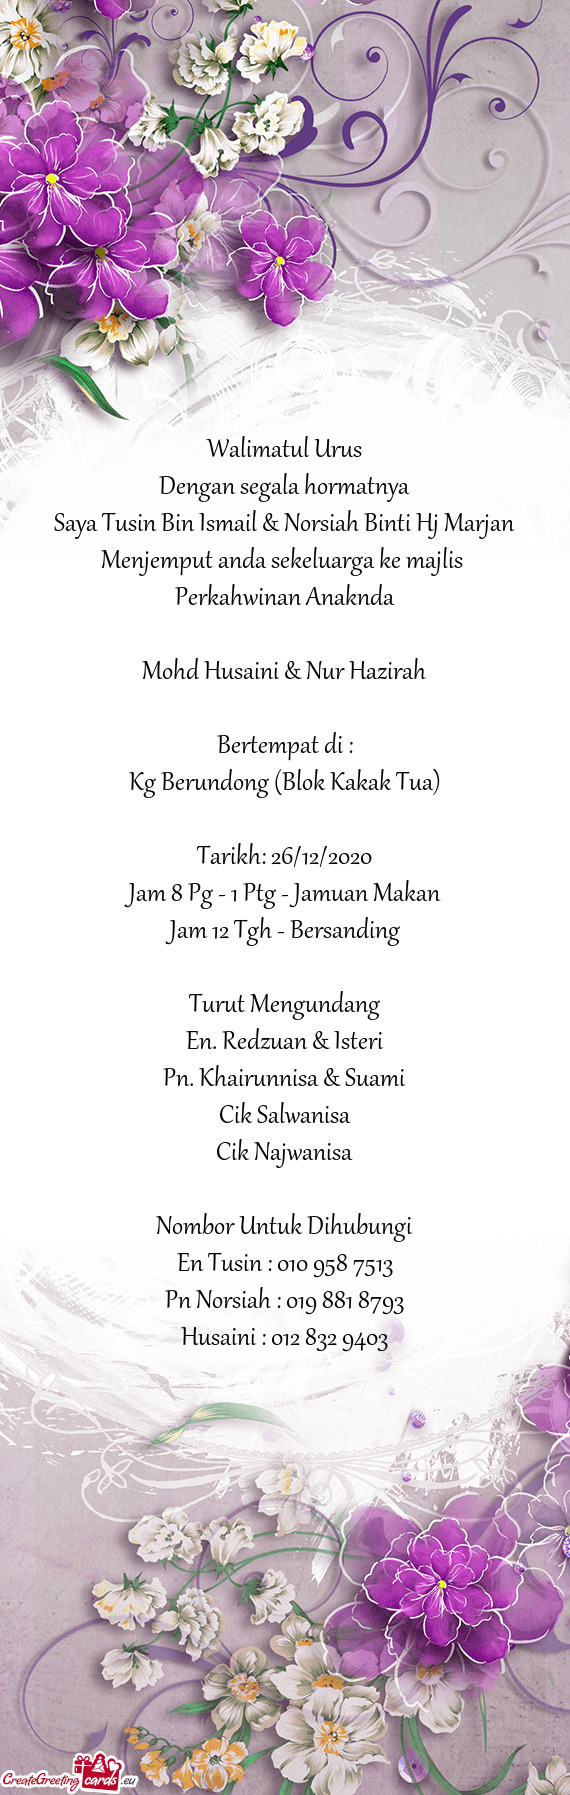 Mohd Husaini & Nur Hazirah